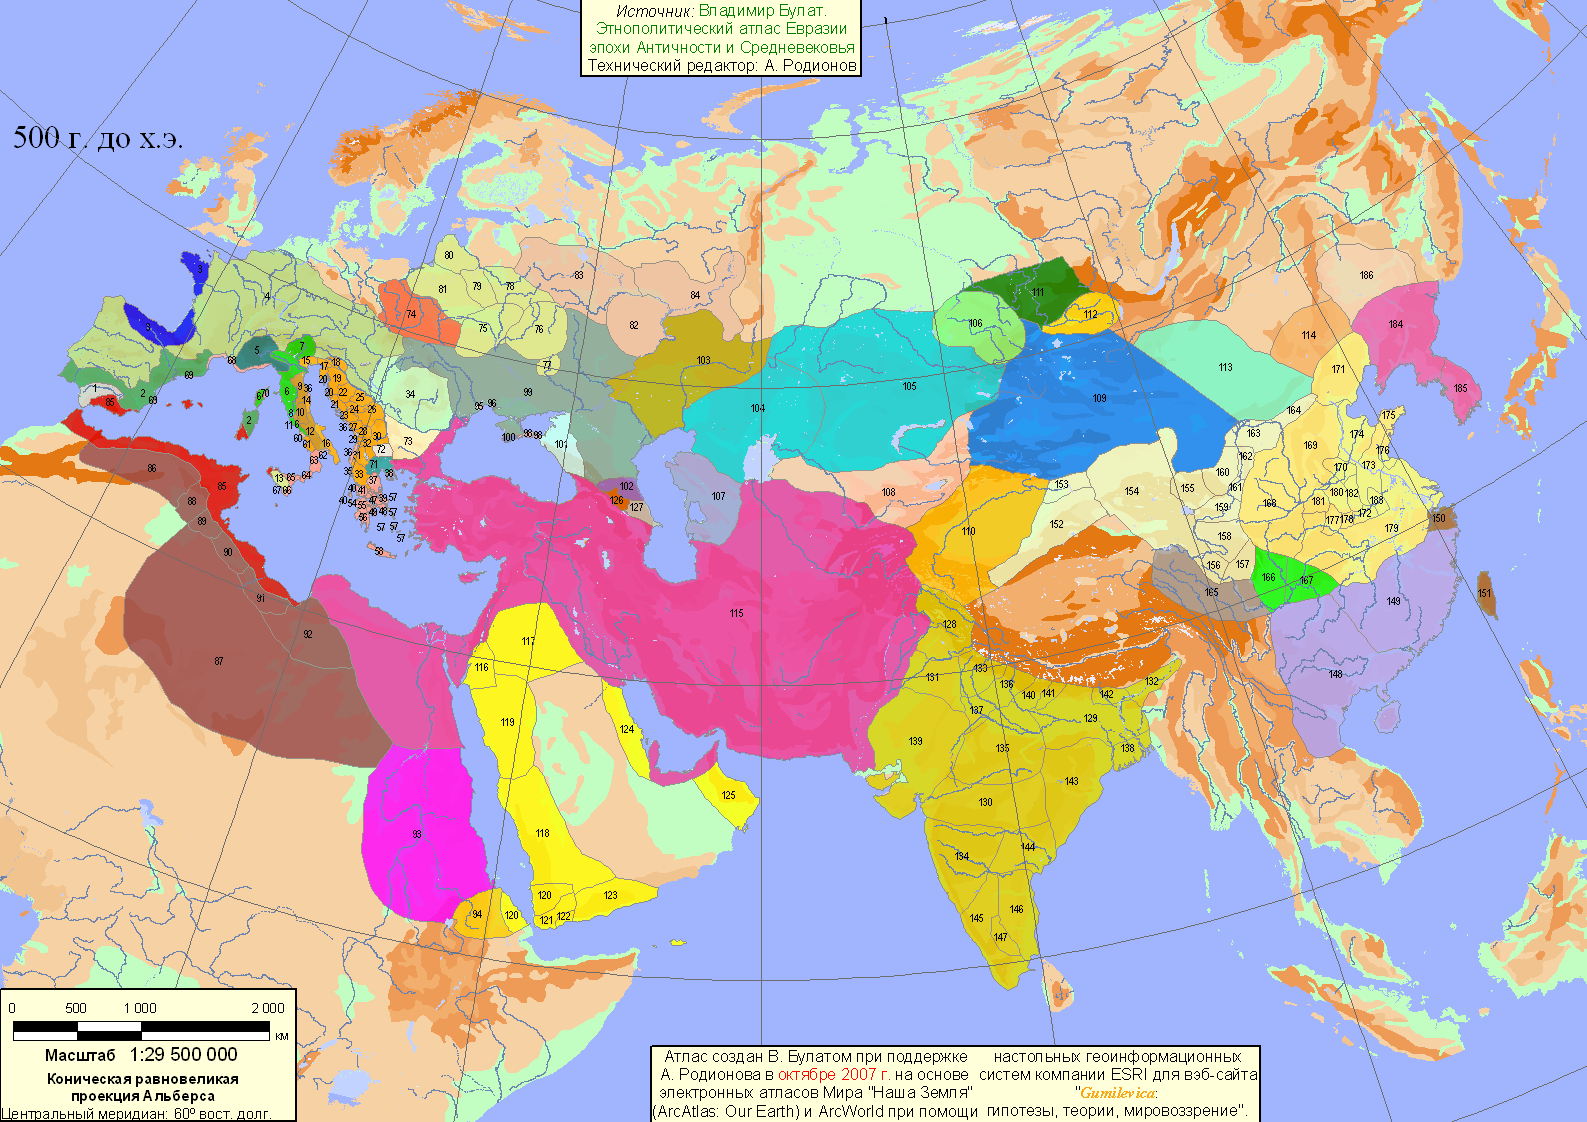 Eurasia - 500 BC (304 Kbytes)